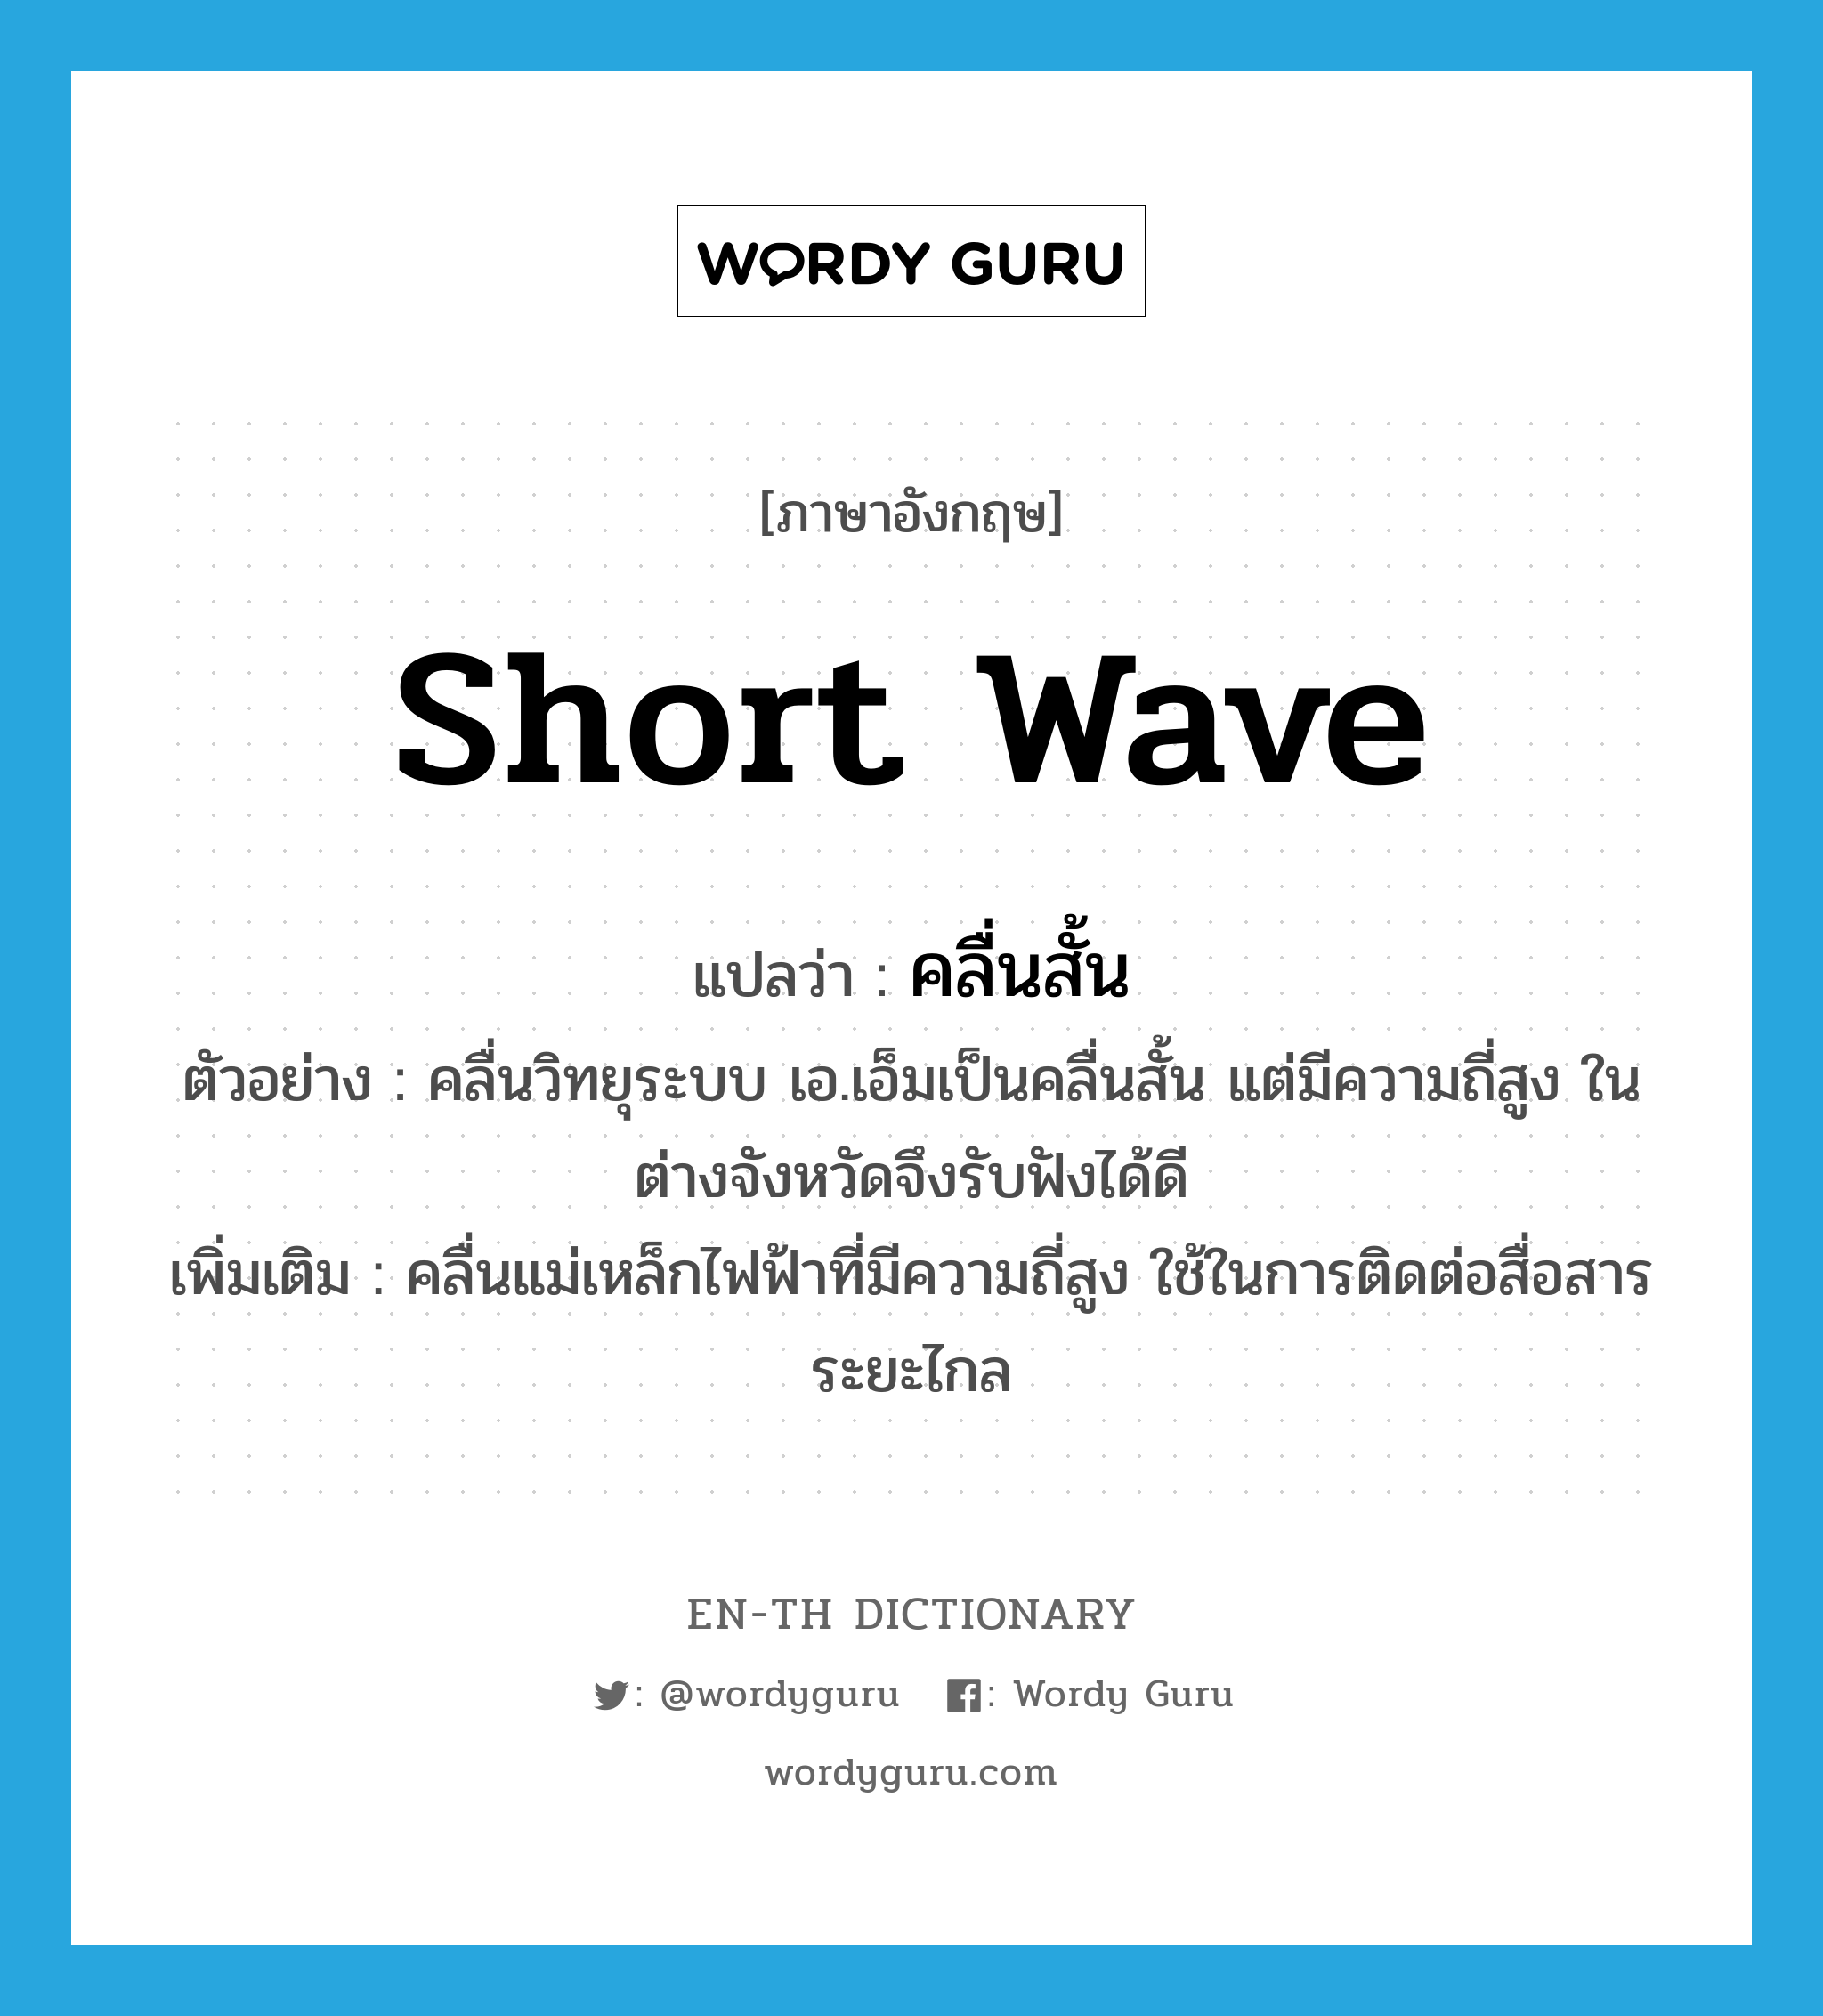 short wave แปลว่า?, คำศัพท์ภาษาอังกฤษ short wave แปลว่า คลื่นสั้น ประเภท N ตัวอย่าง คลื่นวิทยุระบบ เอ.เอ็มเป็นคลื่นสั้น แต่มีความถี่สูง ในต่างจังหวัดจึงรับฟังได้ดี เพิ่มเติม คลื่นแม่เหล็กไฟฟ้าที่มีความถี่สูง ใช้ในการติดต่อสื่อสารระยะไกล หมวด N